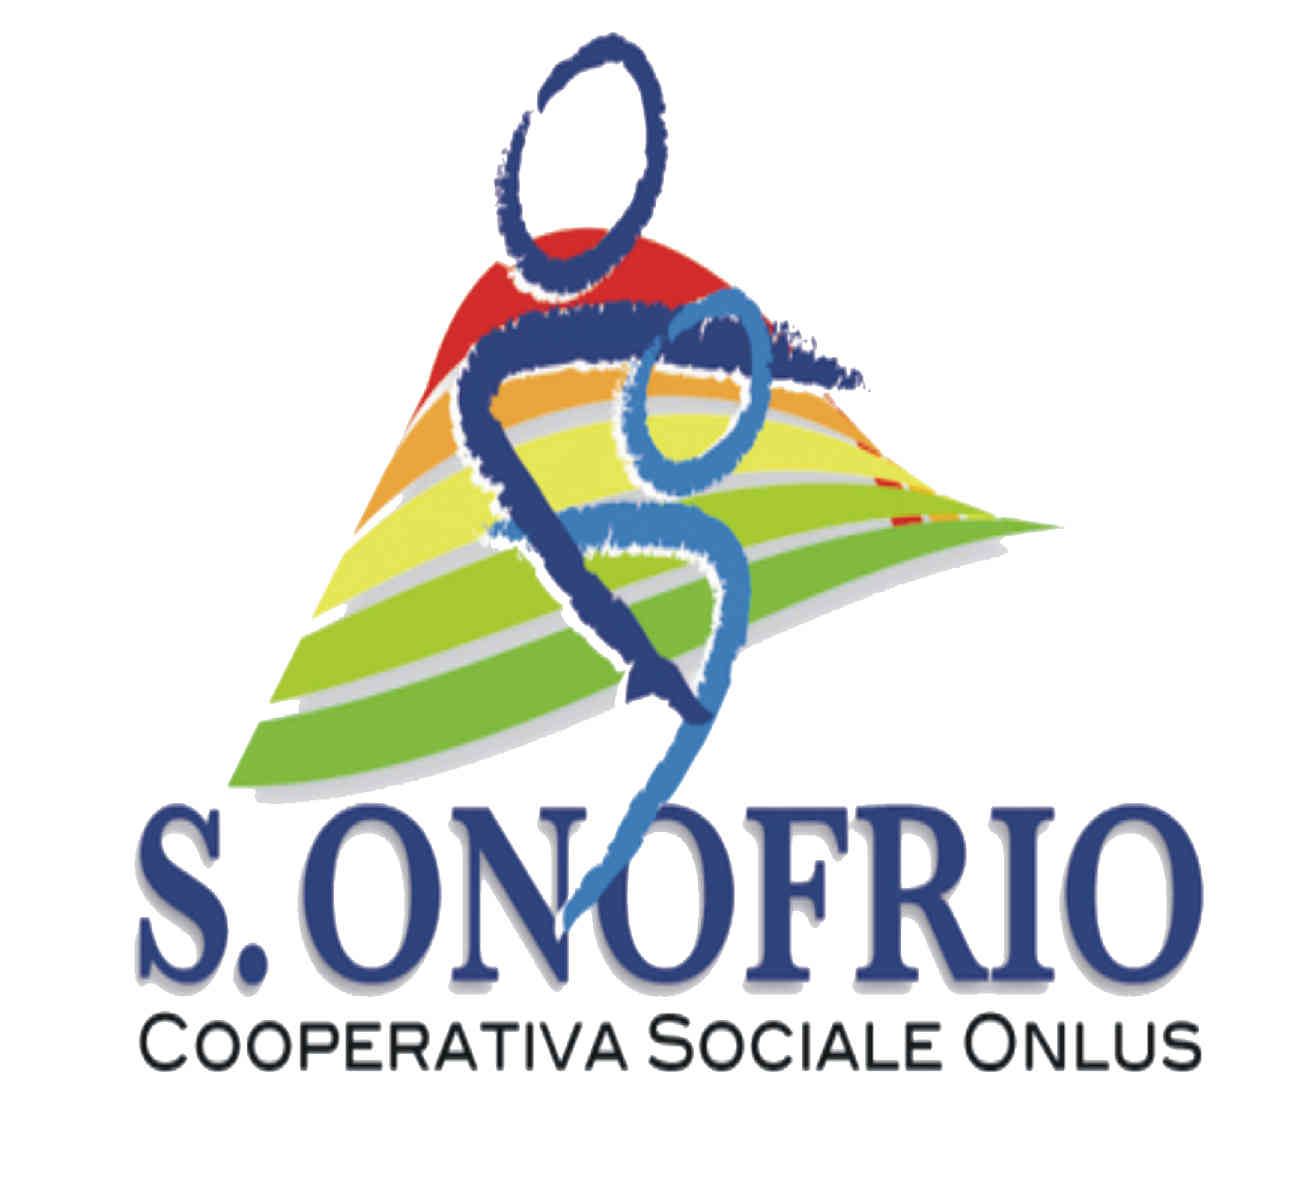 S. Onofrio Cooperativa Sociale Onlus